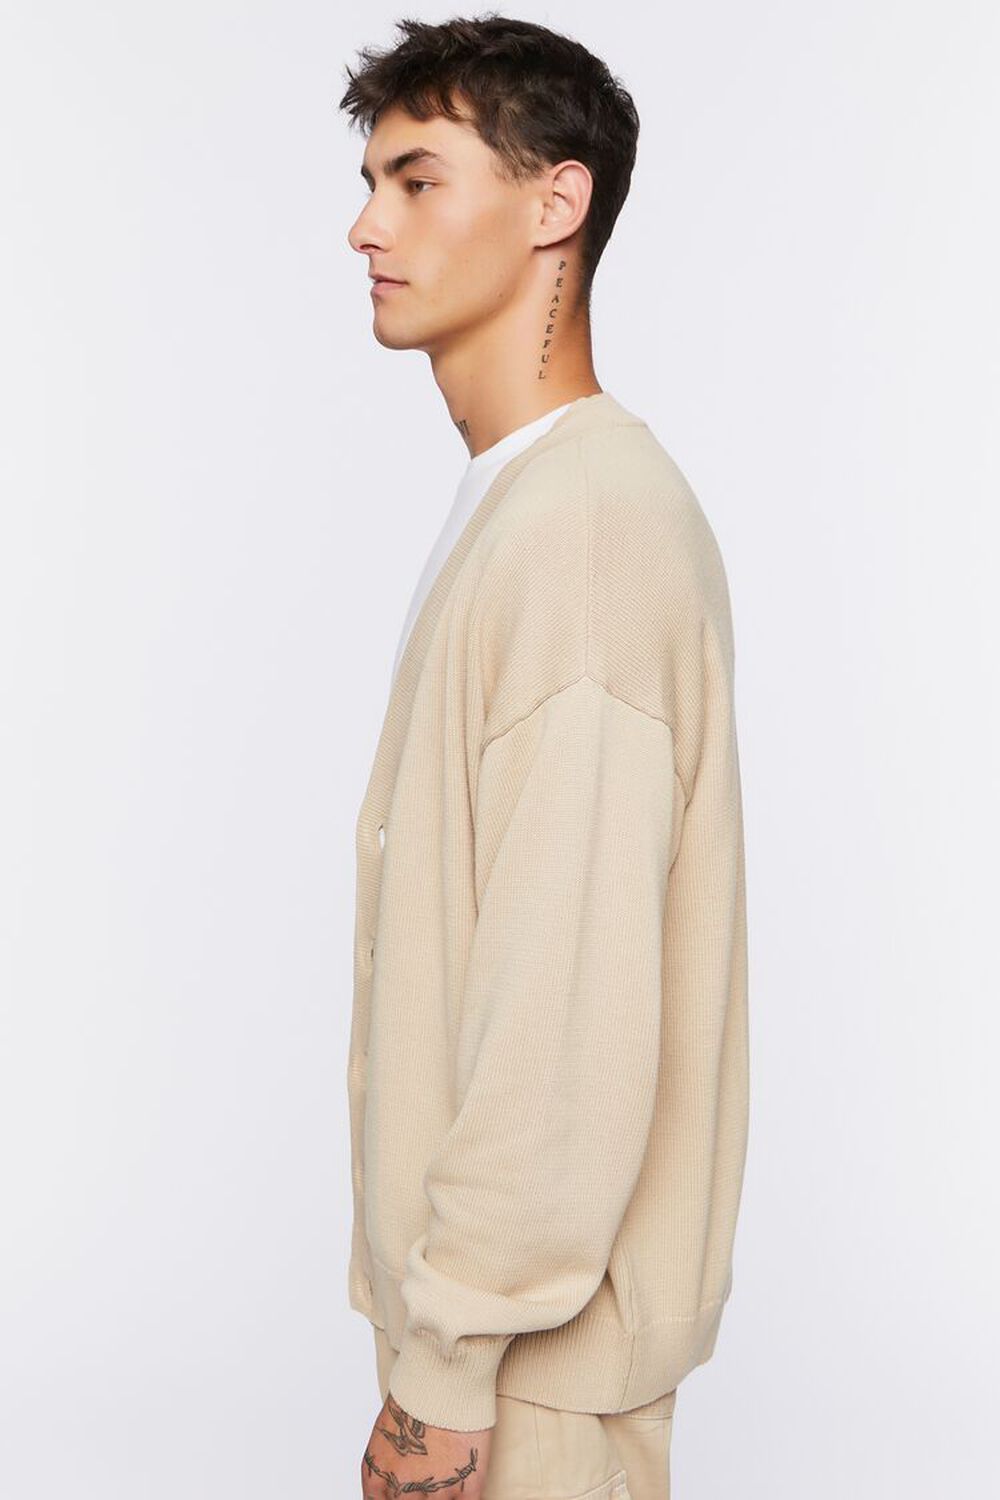 TAUPE Drop-Sleeve Cardigan Sweater, image 2